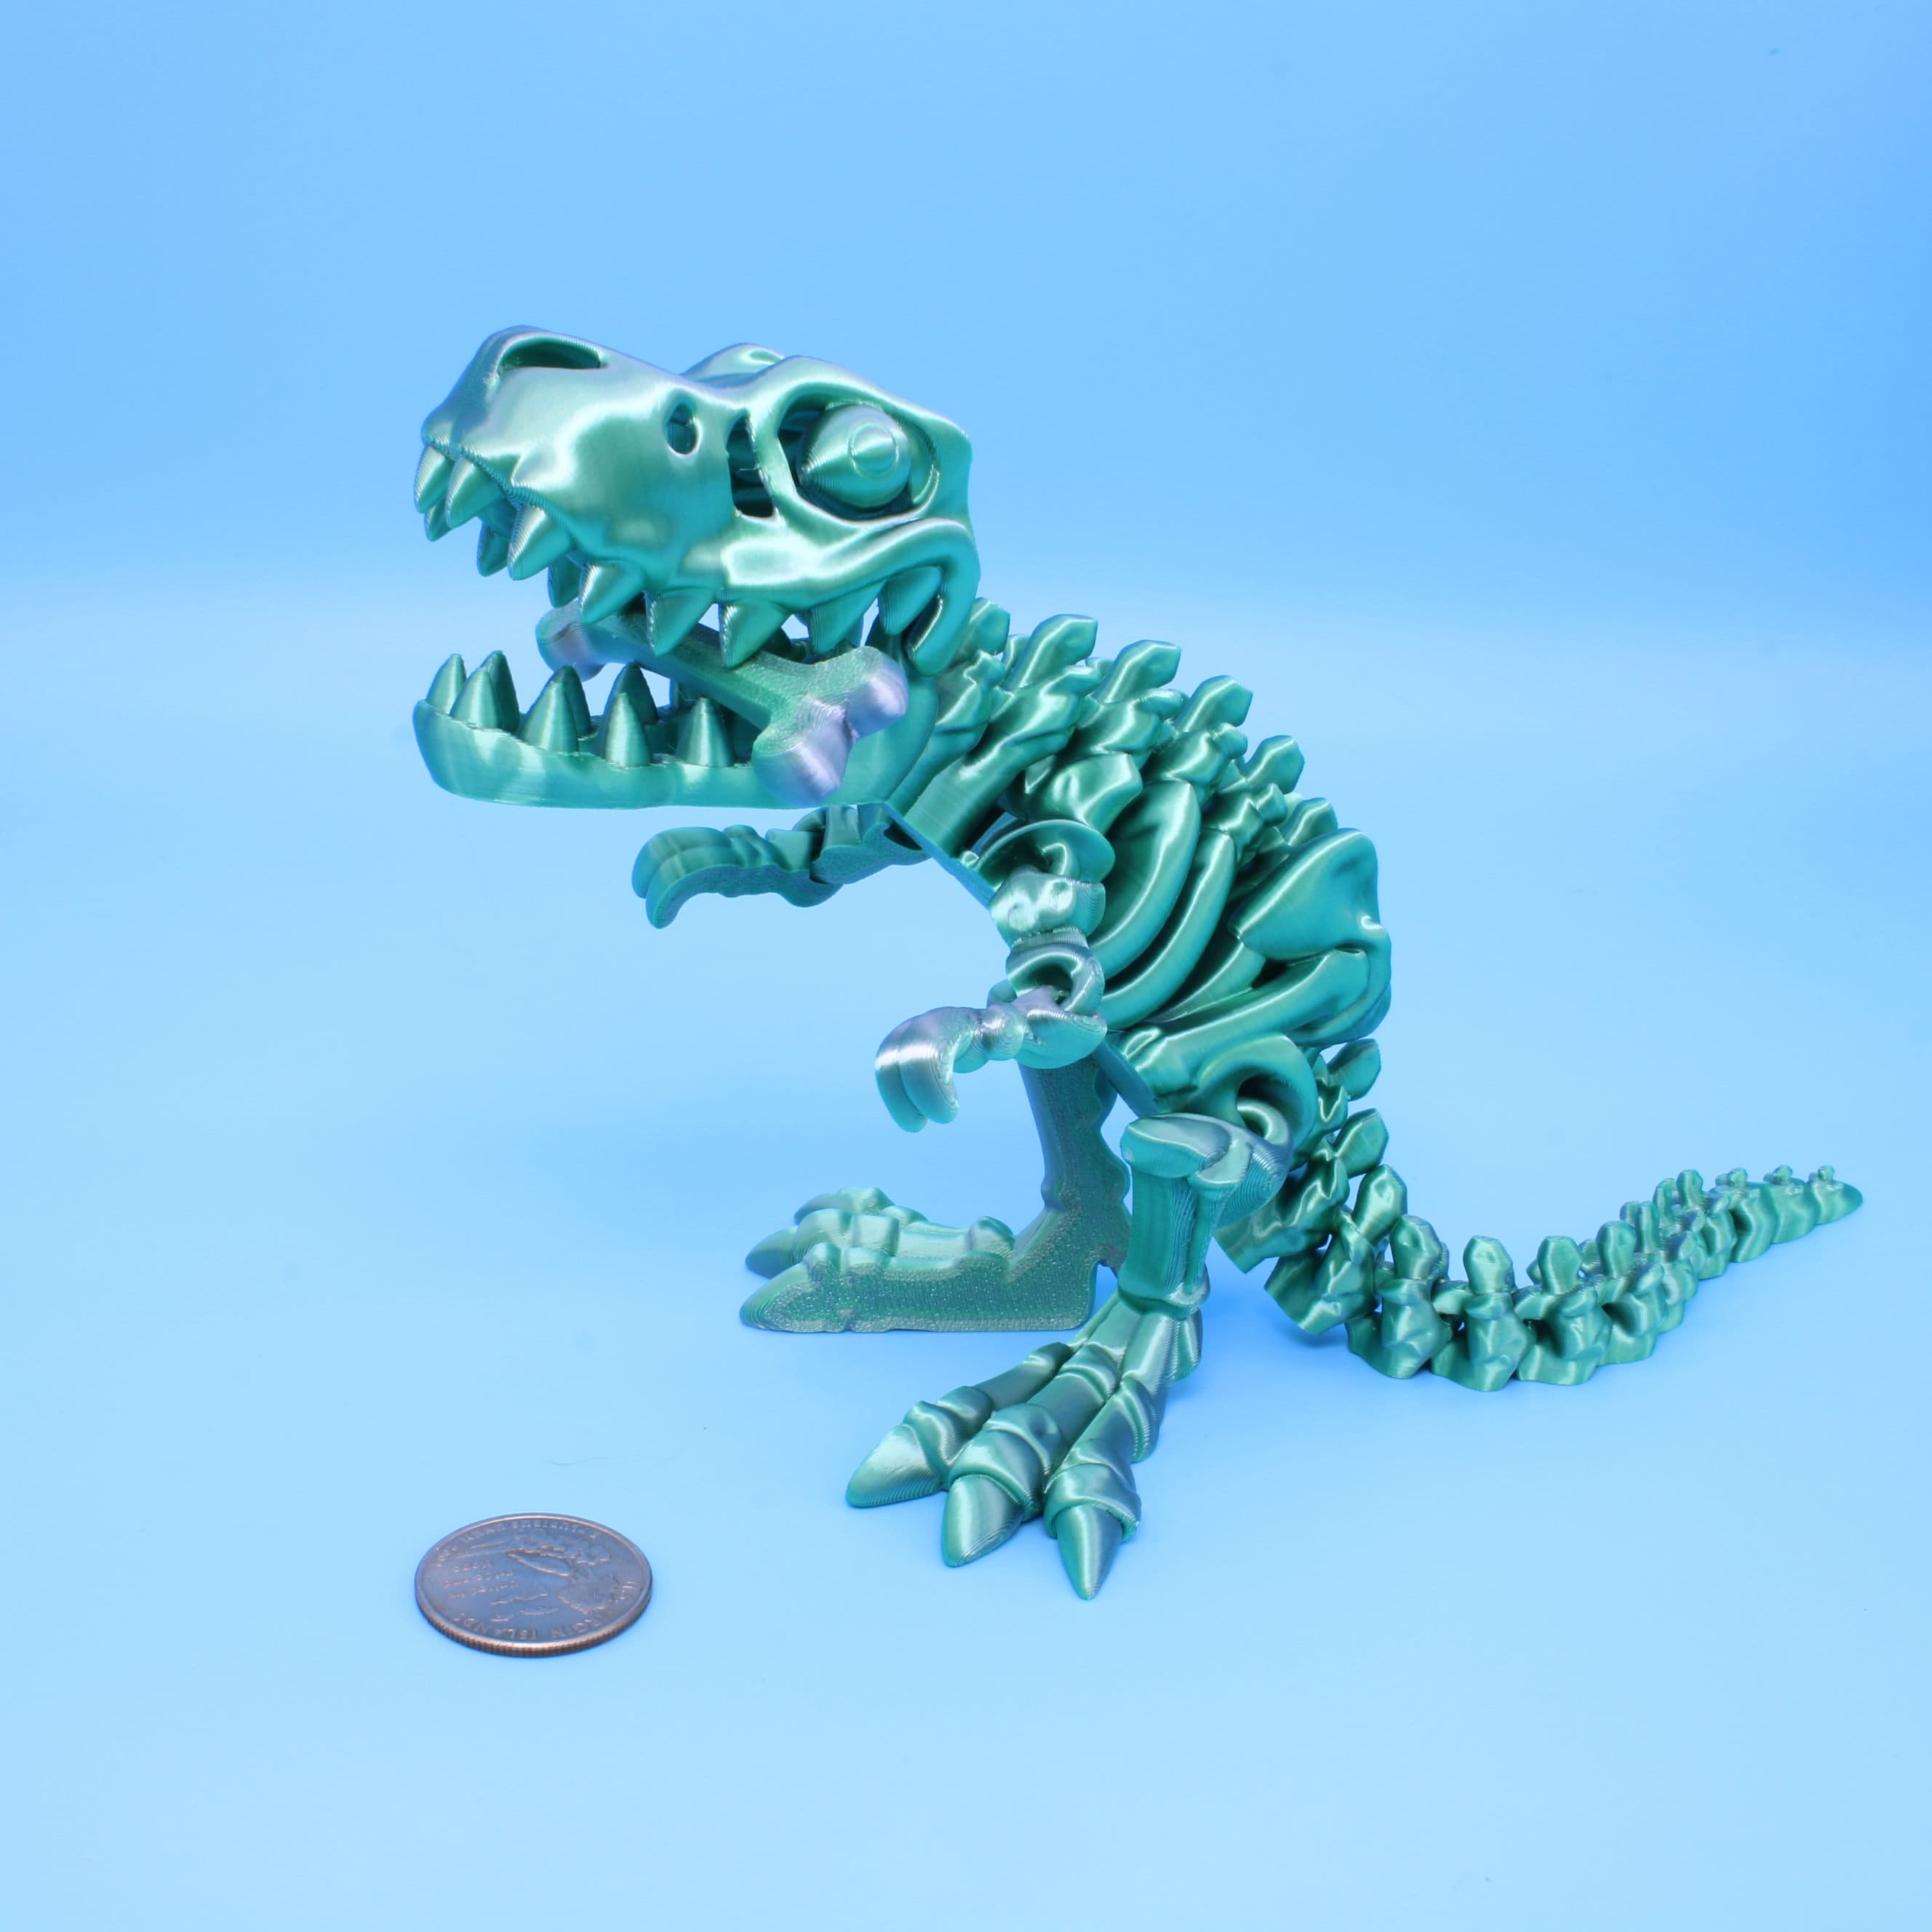 Flexi Skelton T-Rex | Articulating | 3D Printed